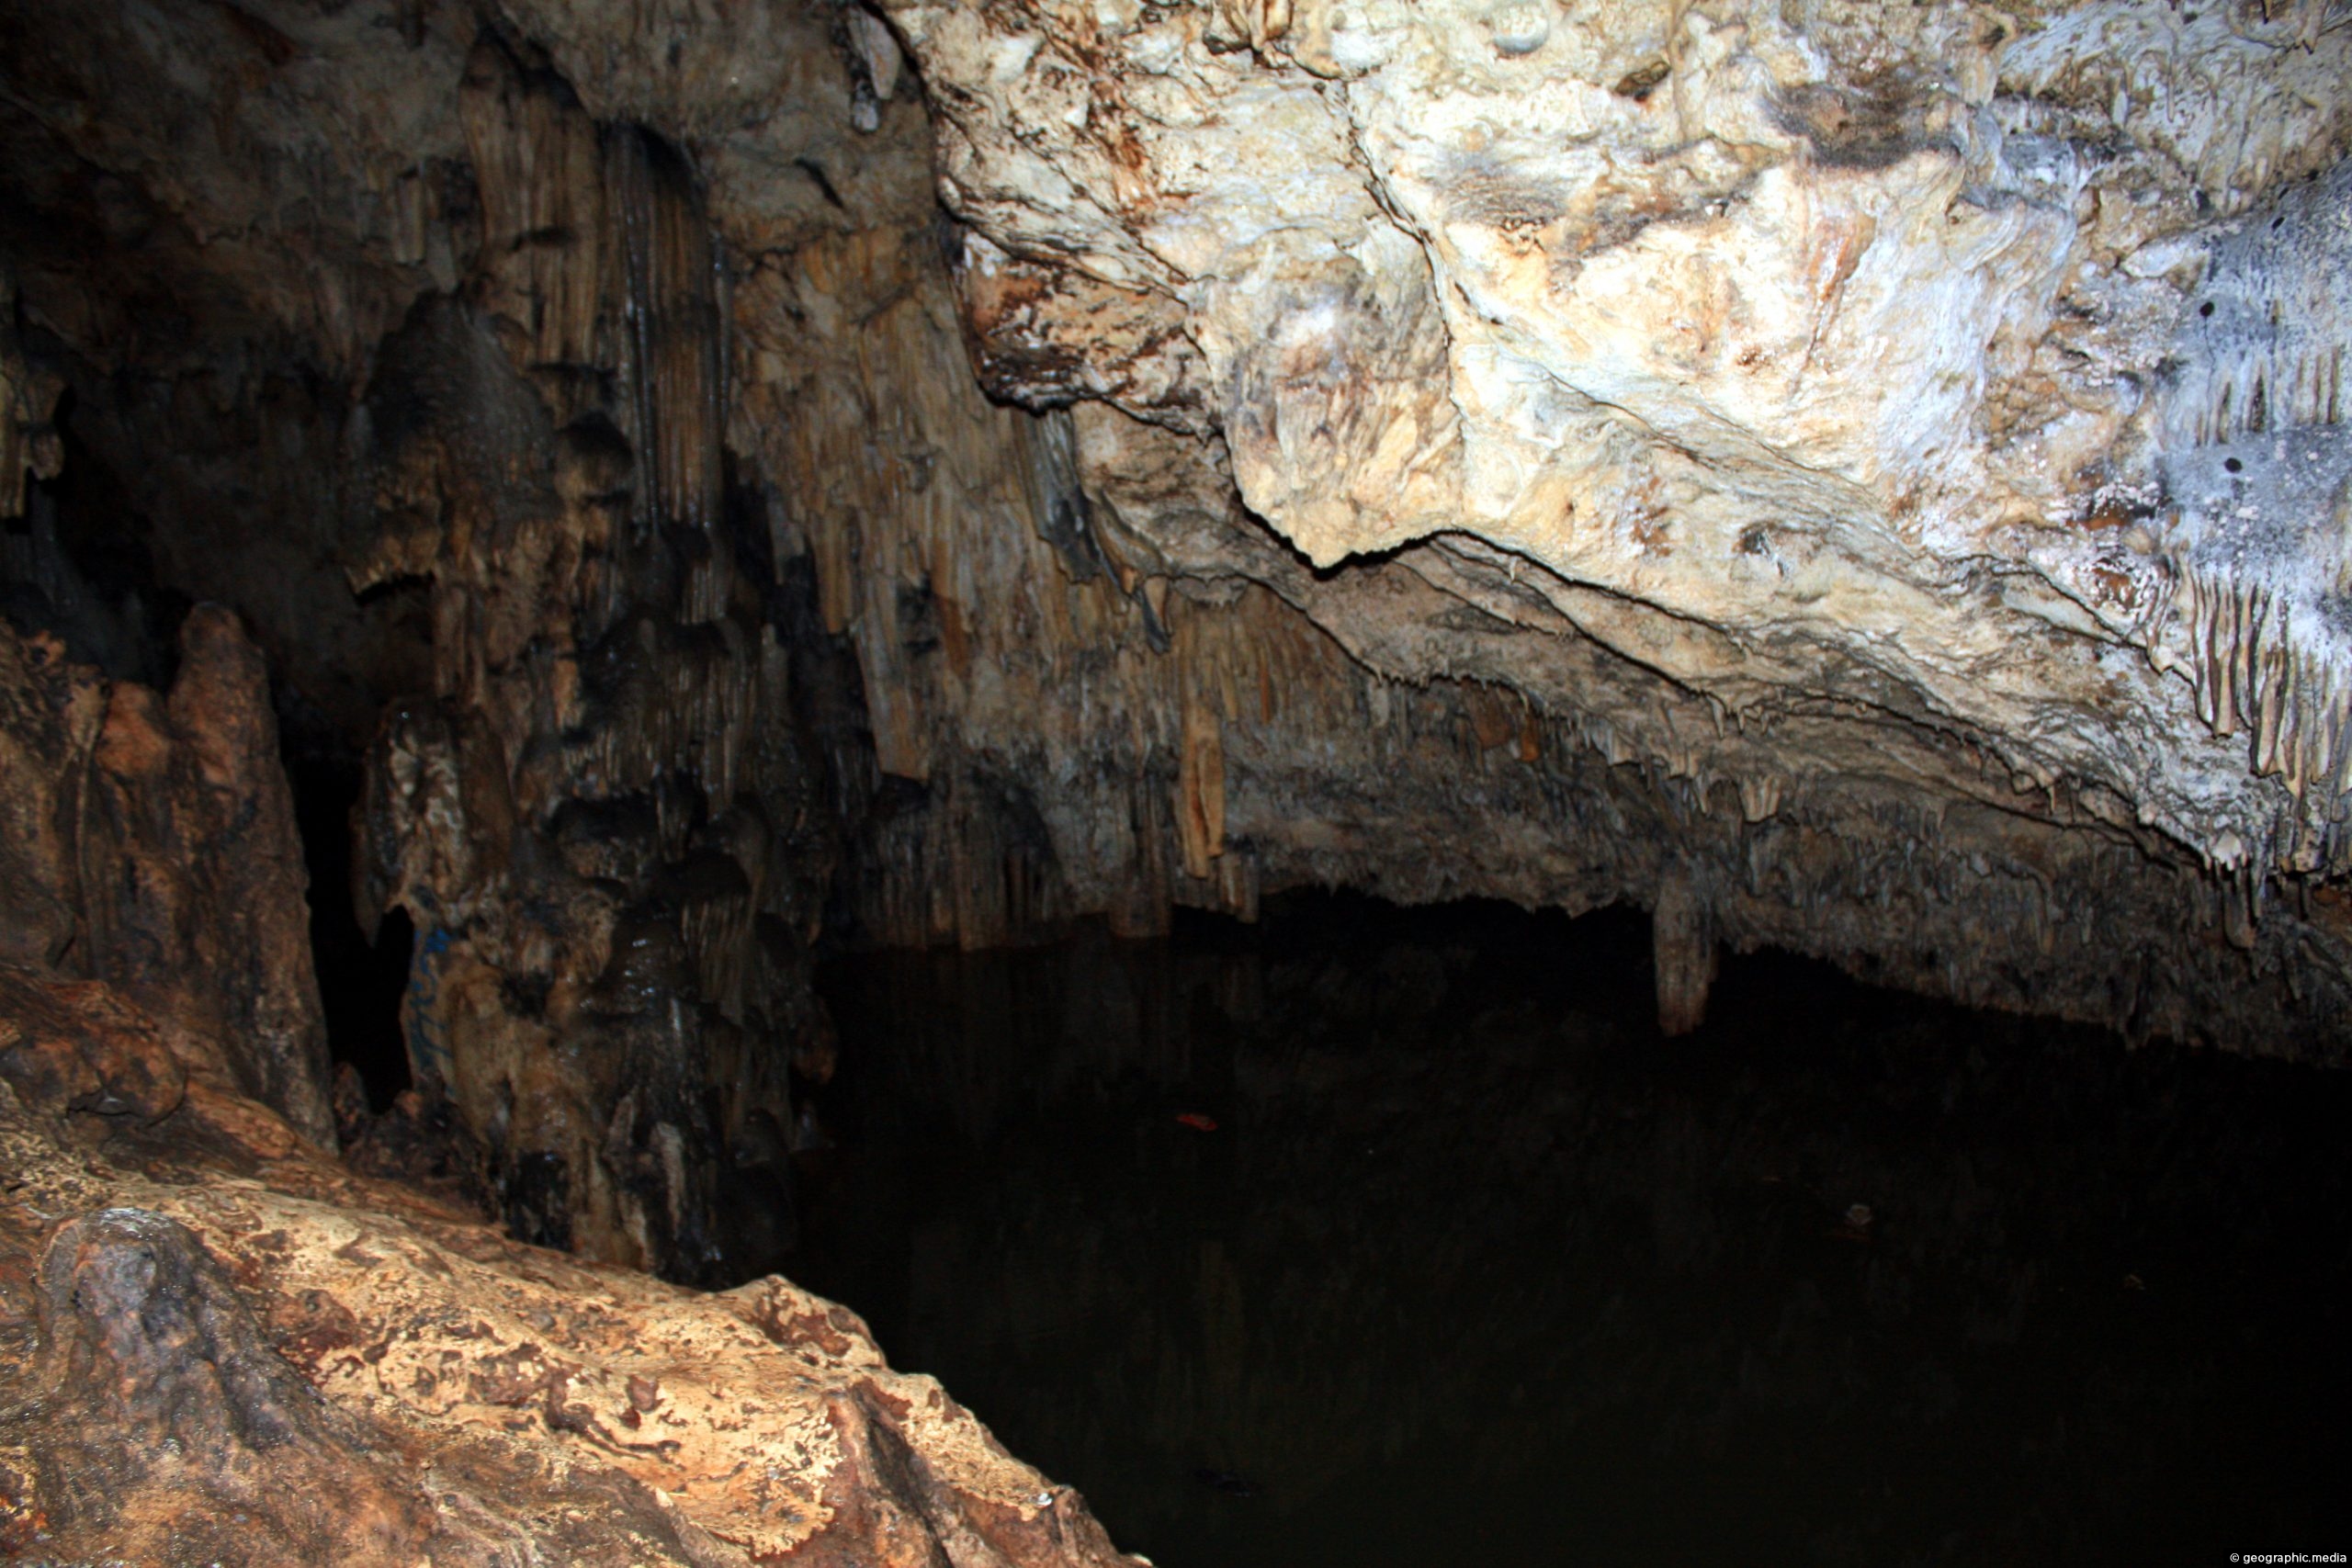 Entering Anahulu Cave on Tongatapu Island